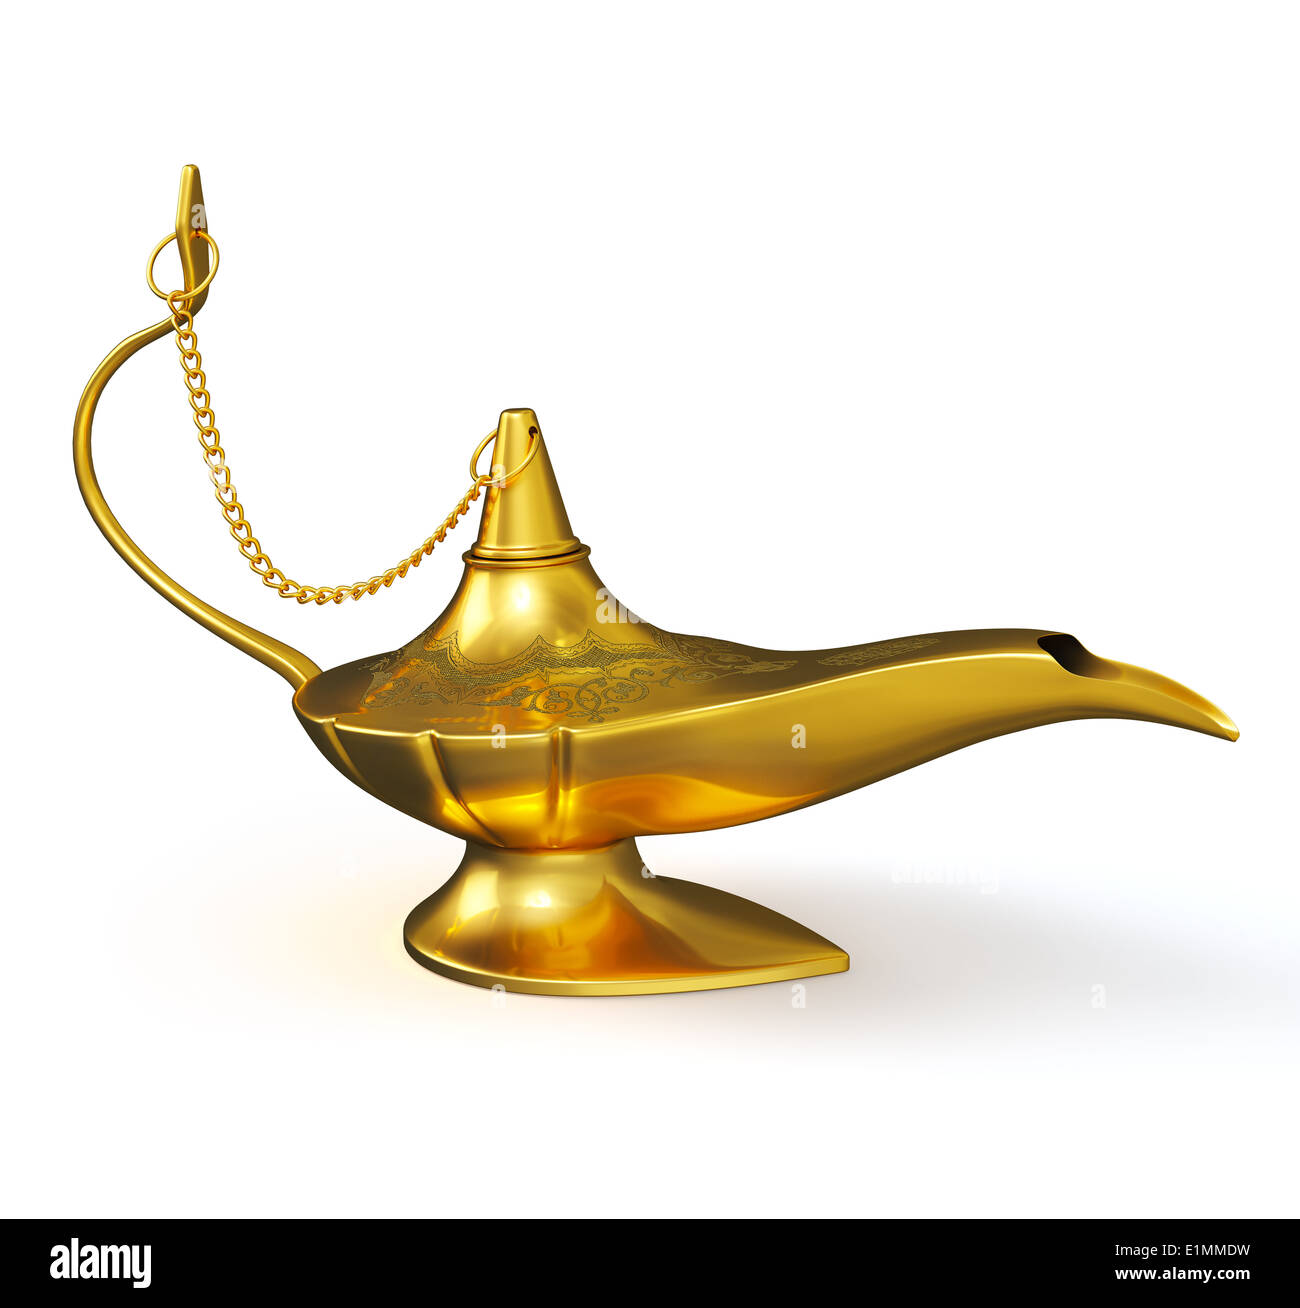 Golden Aladdin magic genie lamp isolated on white Stock Photo - Alamy